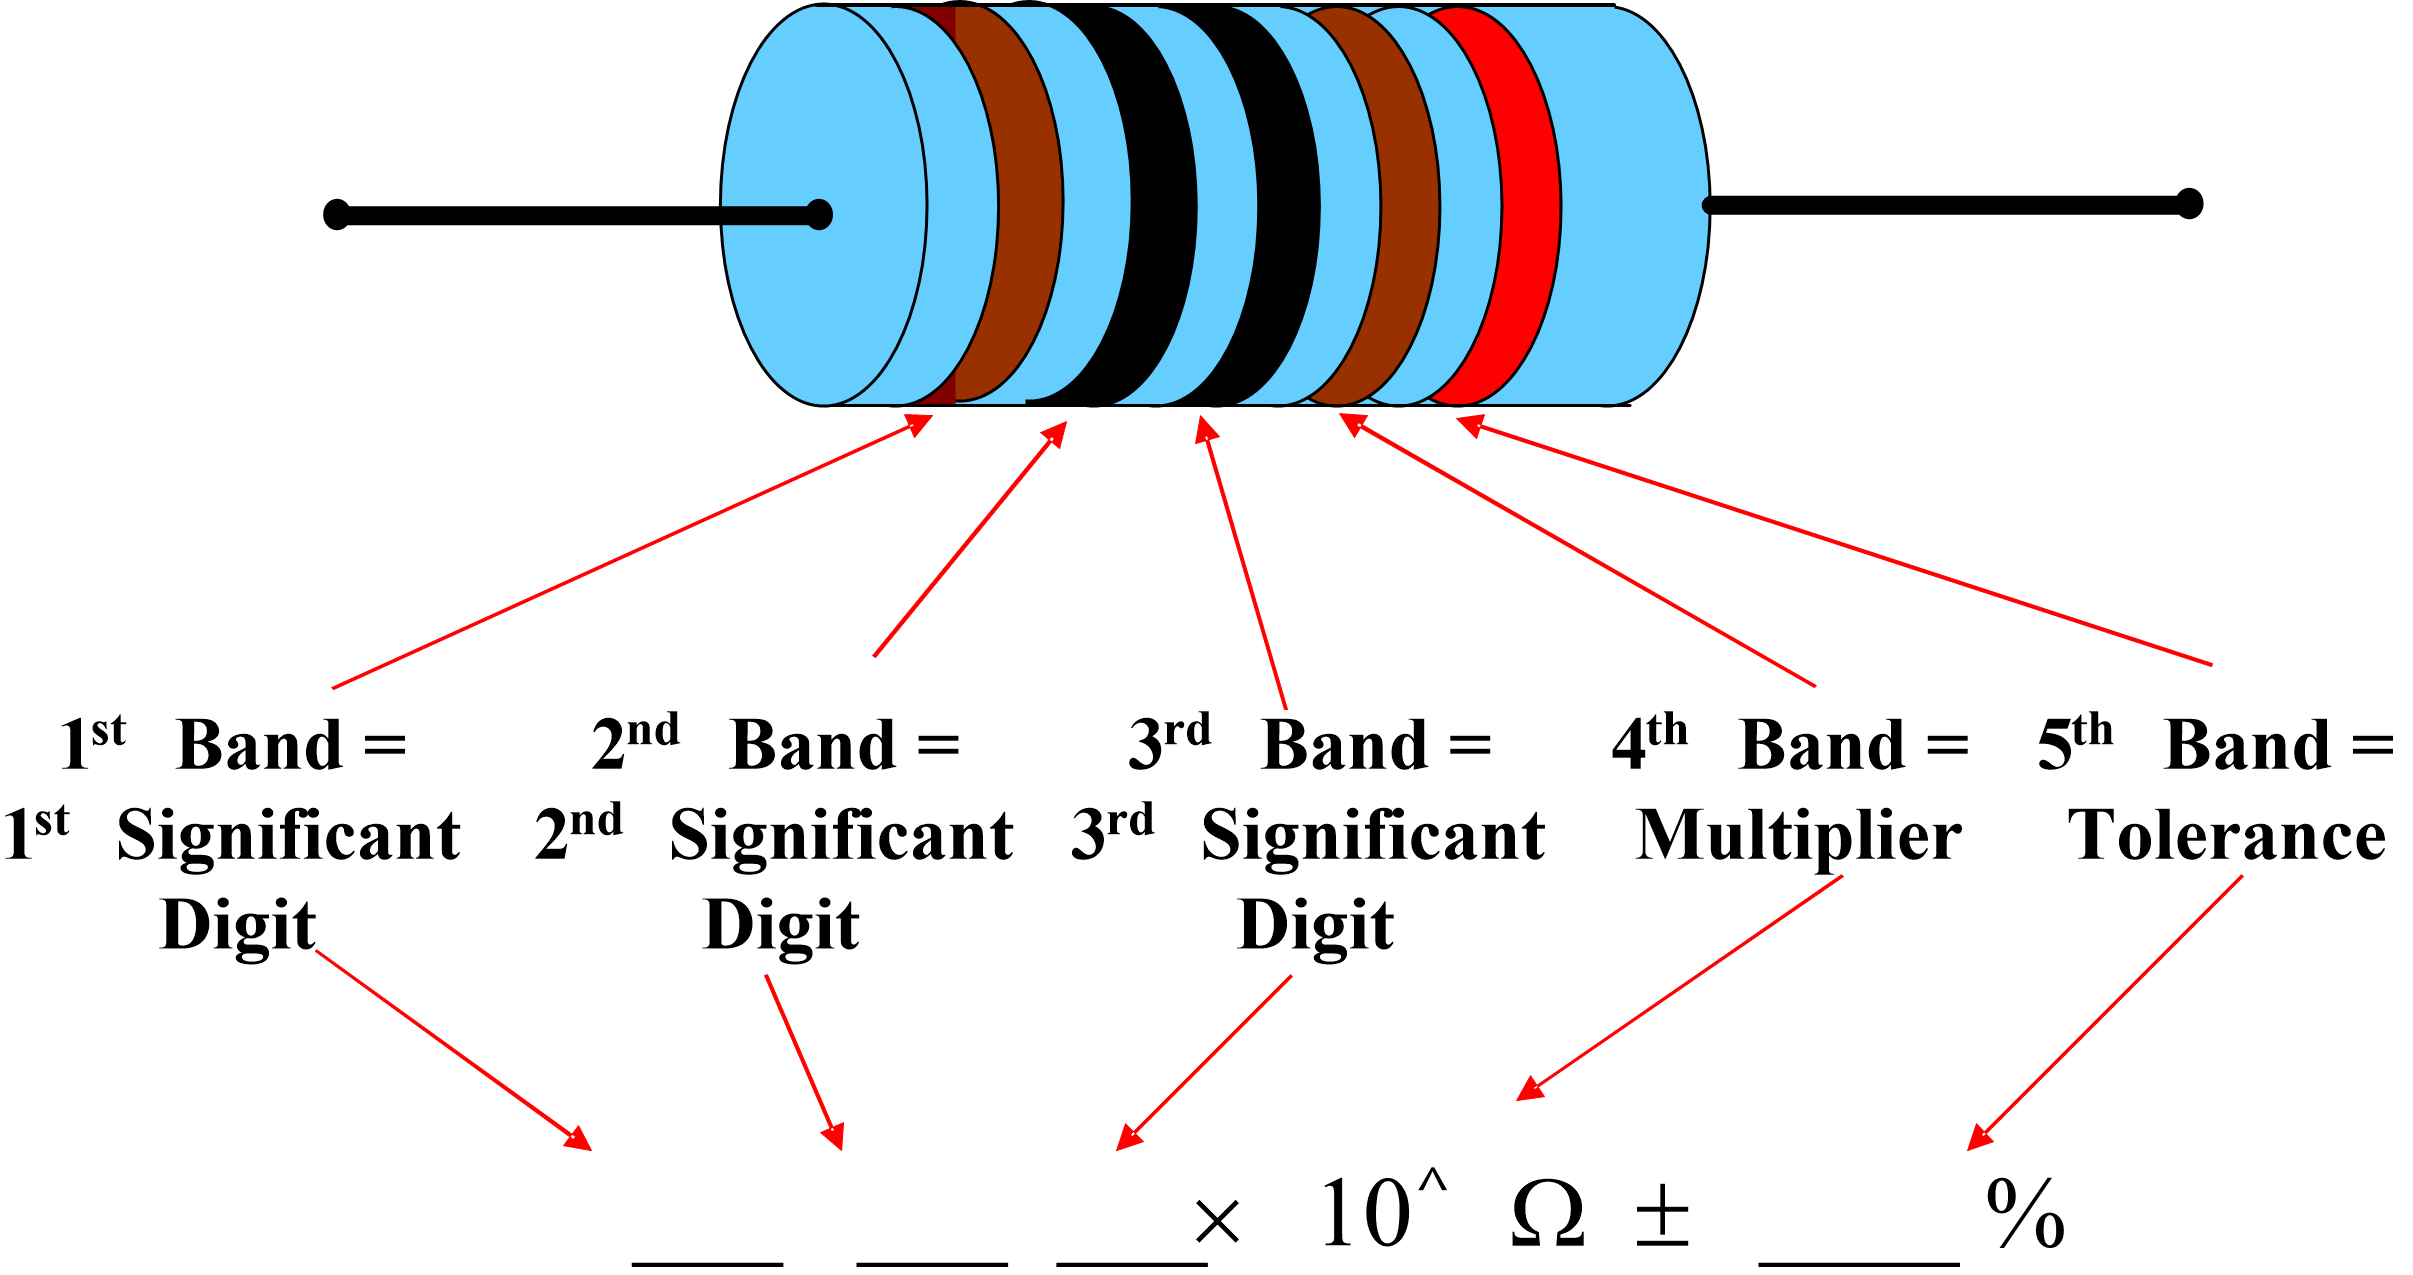 5 band resistor color code - barterfecol